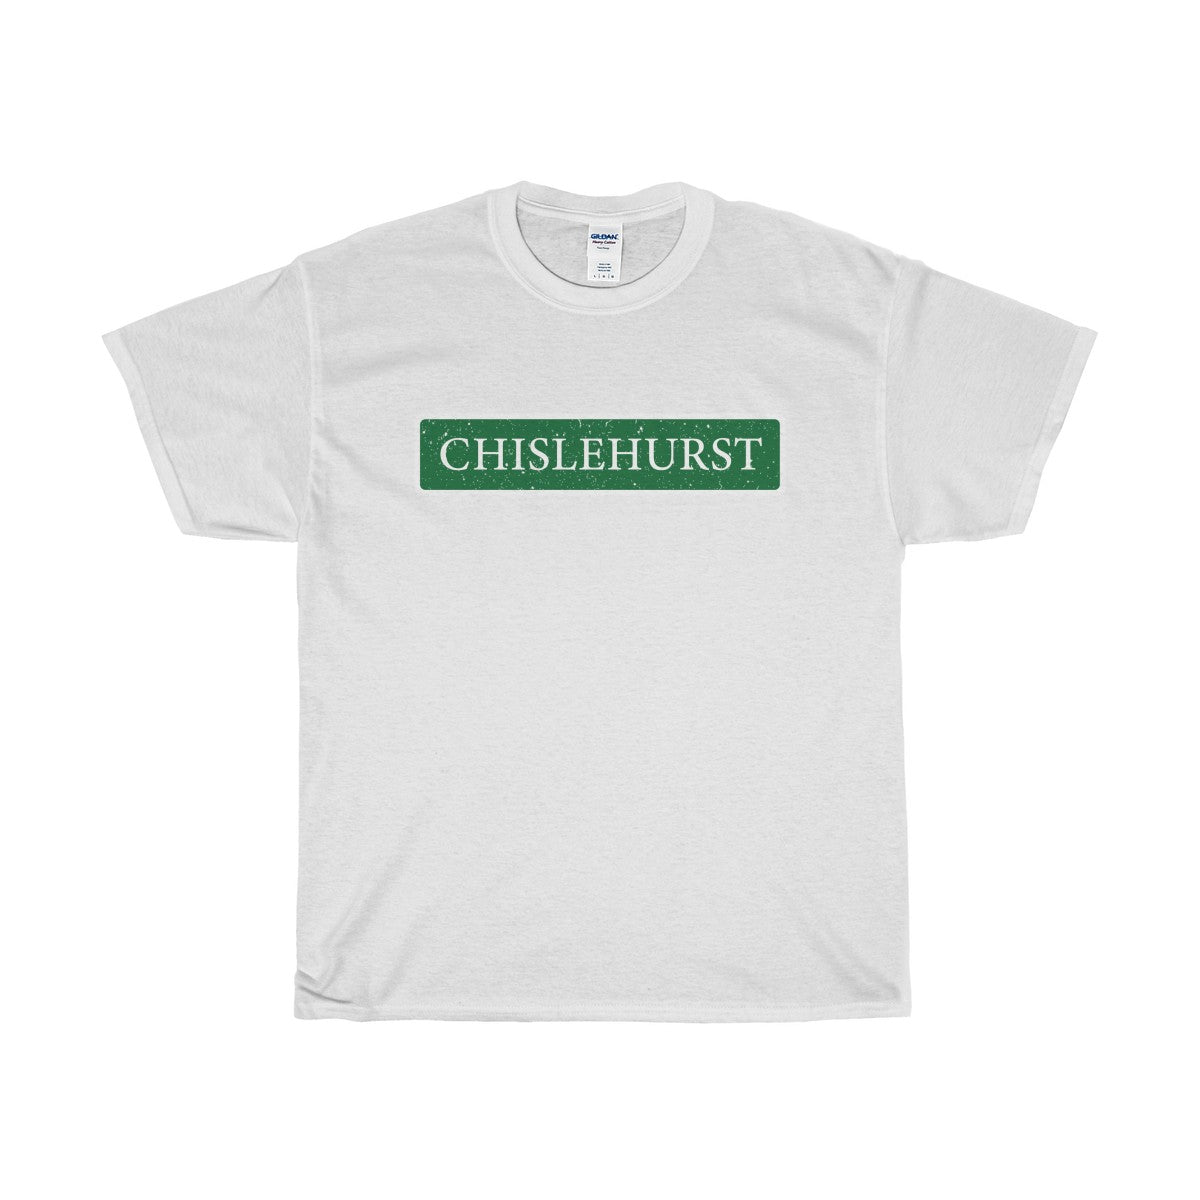 Chislehurst T-Shirt